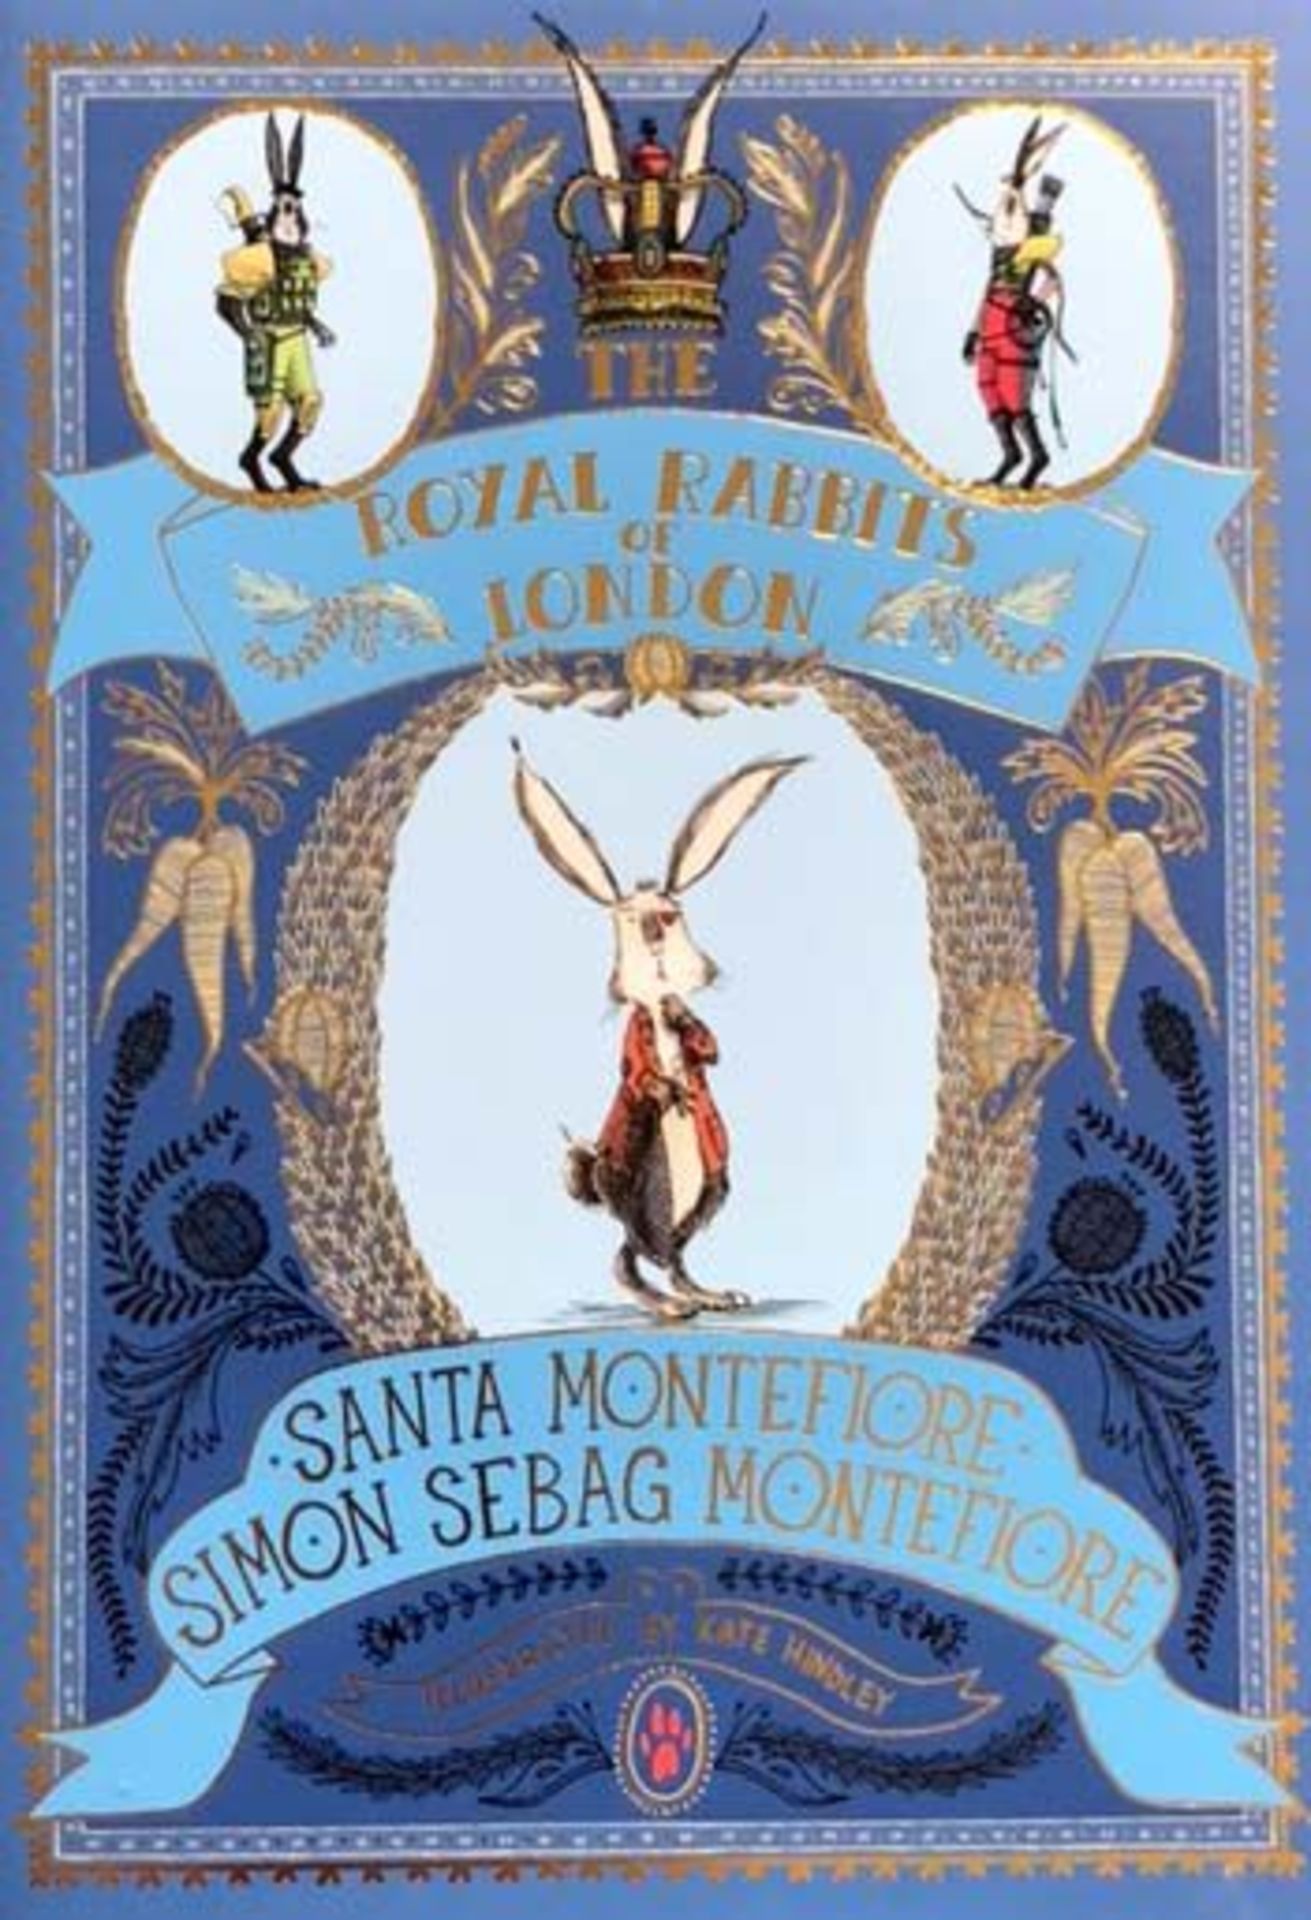 Hard back First Edition of 'The Royal Rabbits Of London' by Santa and Simon Sebag Montefiore,